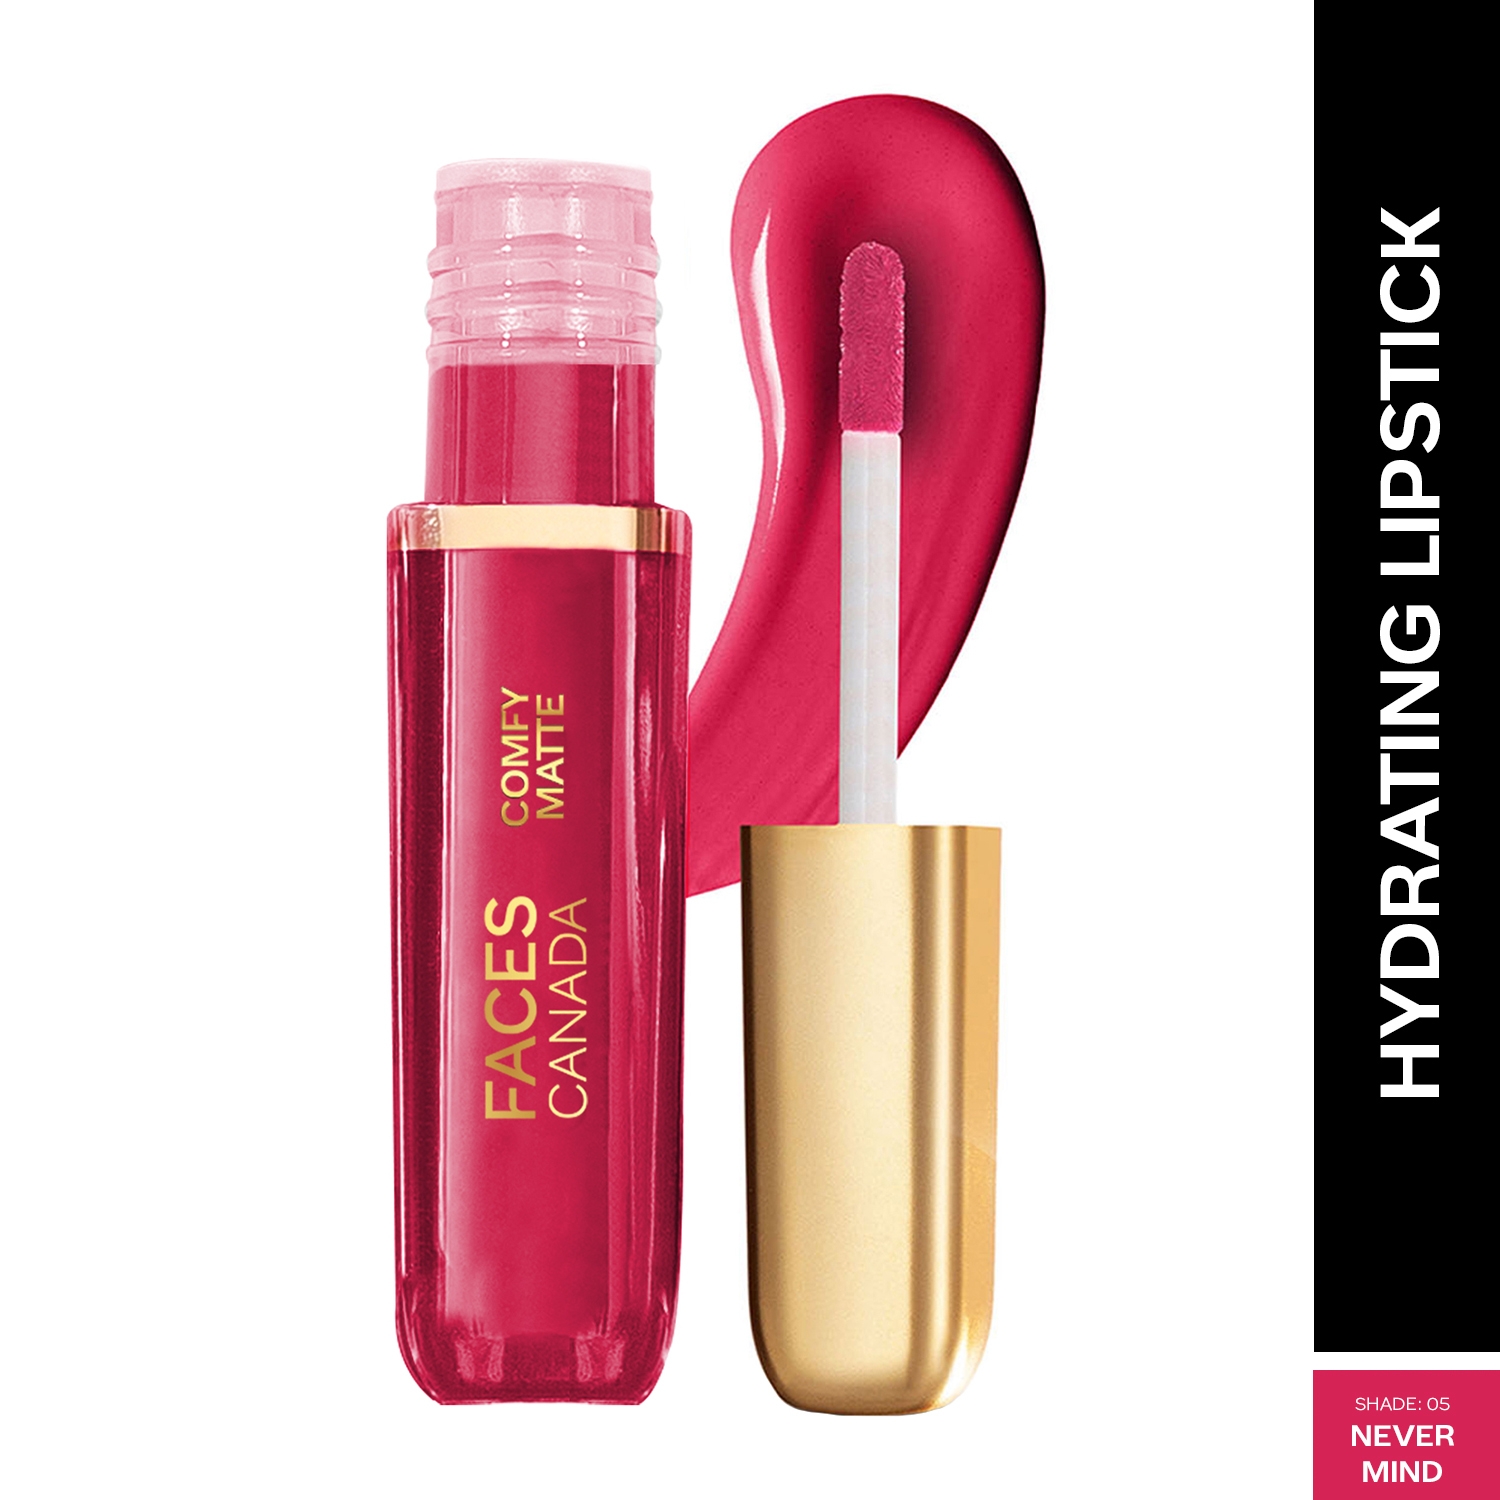 Faces Canada | Faces Canada Comfy Matte Liquid Lipstick 10HR Stay No Dryness - Never Mind 05 (3ml)